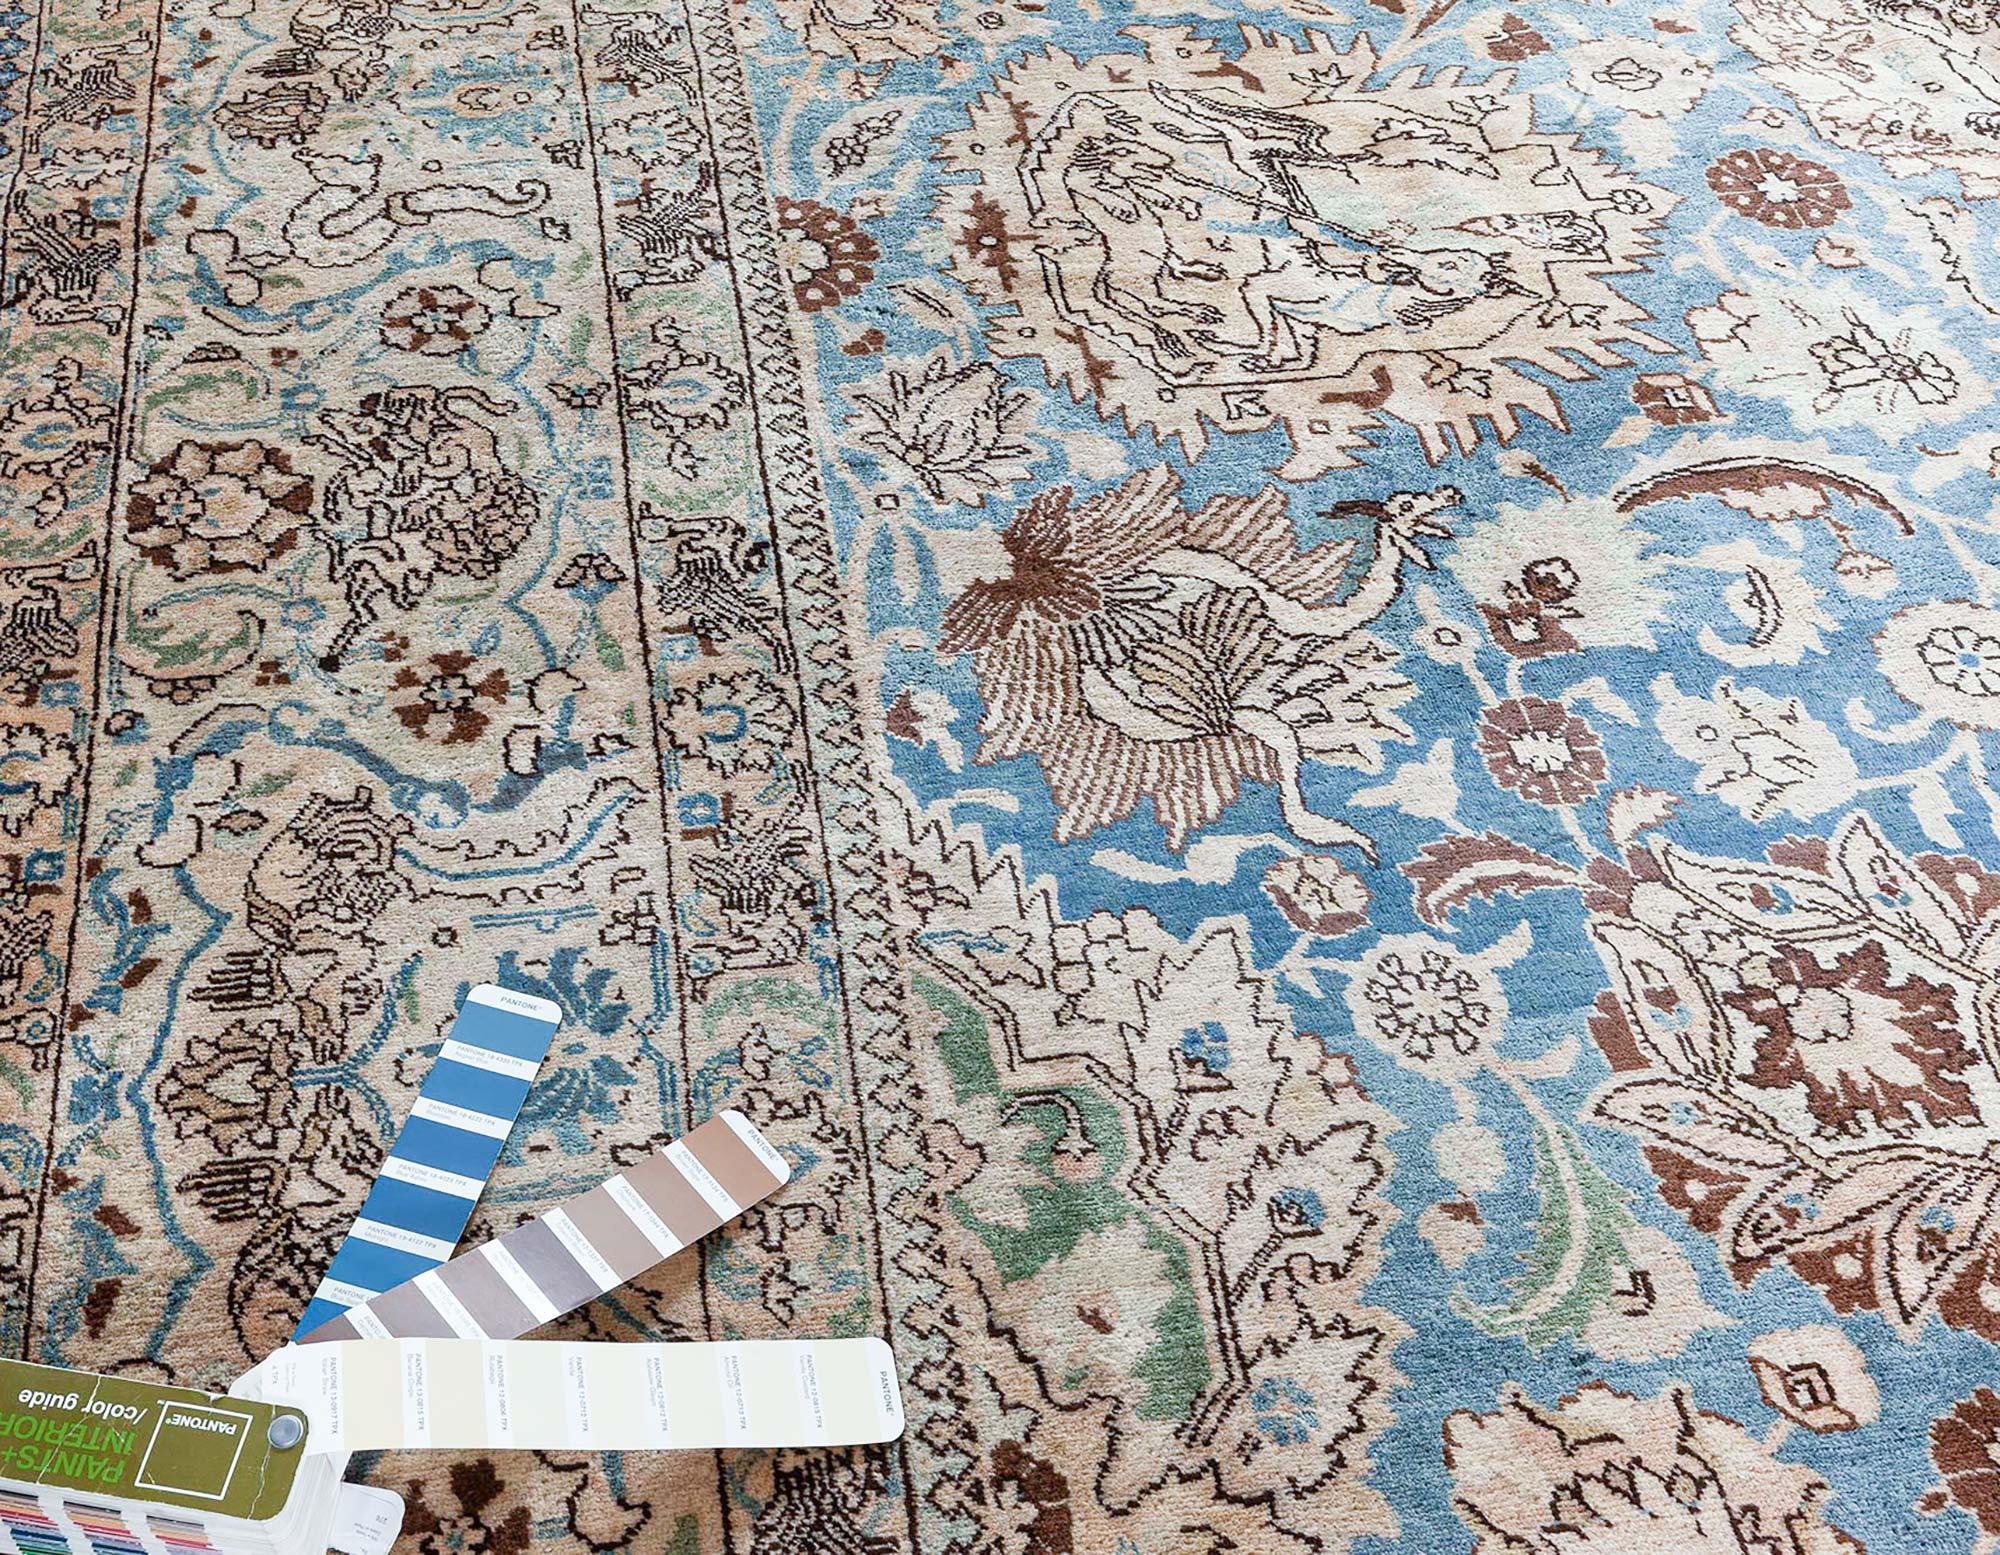 Antique Persian Tabriz botanic handwoven wool rug
Size: 8'7